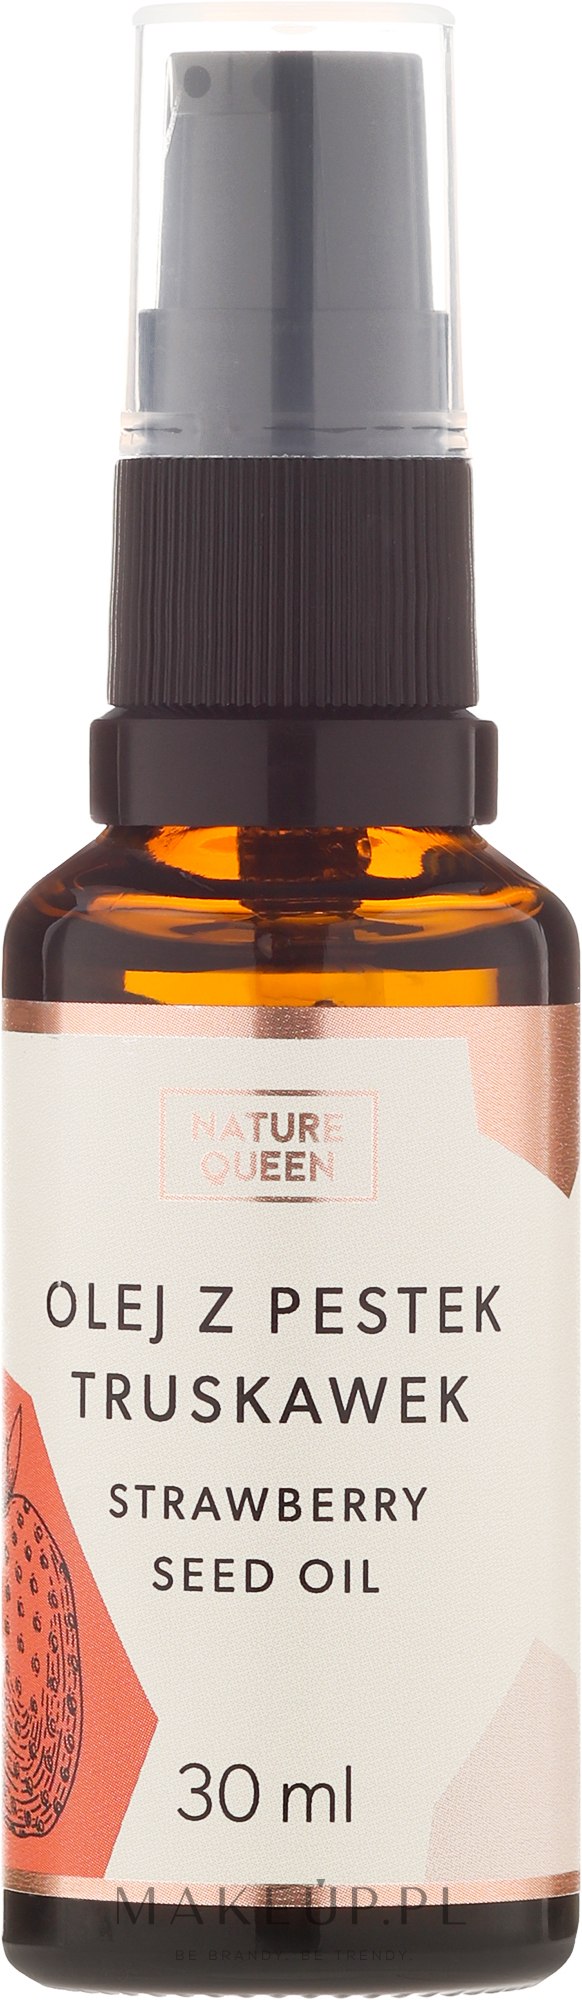 Olej z pestek truskawek - Nature Queen Strawberry Seed Oil — Zdjęcie 30 ml